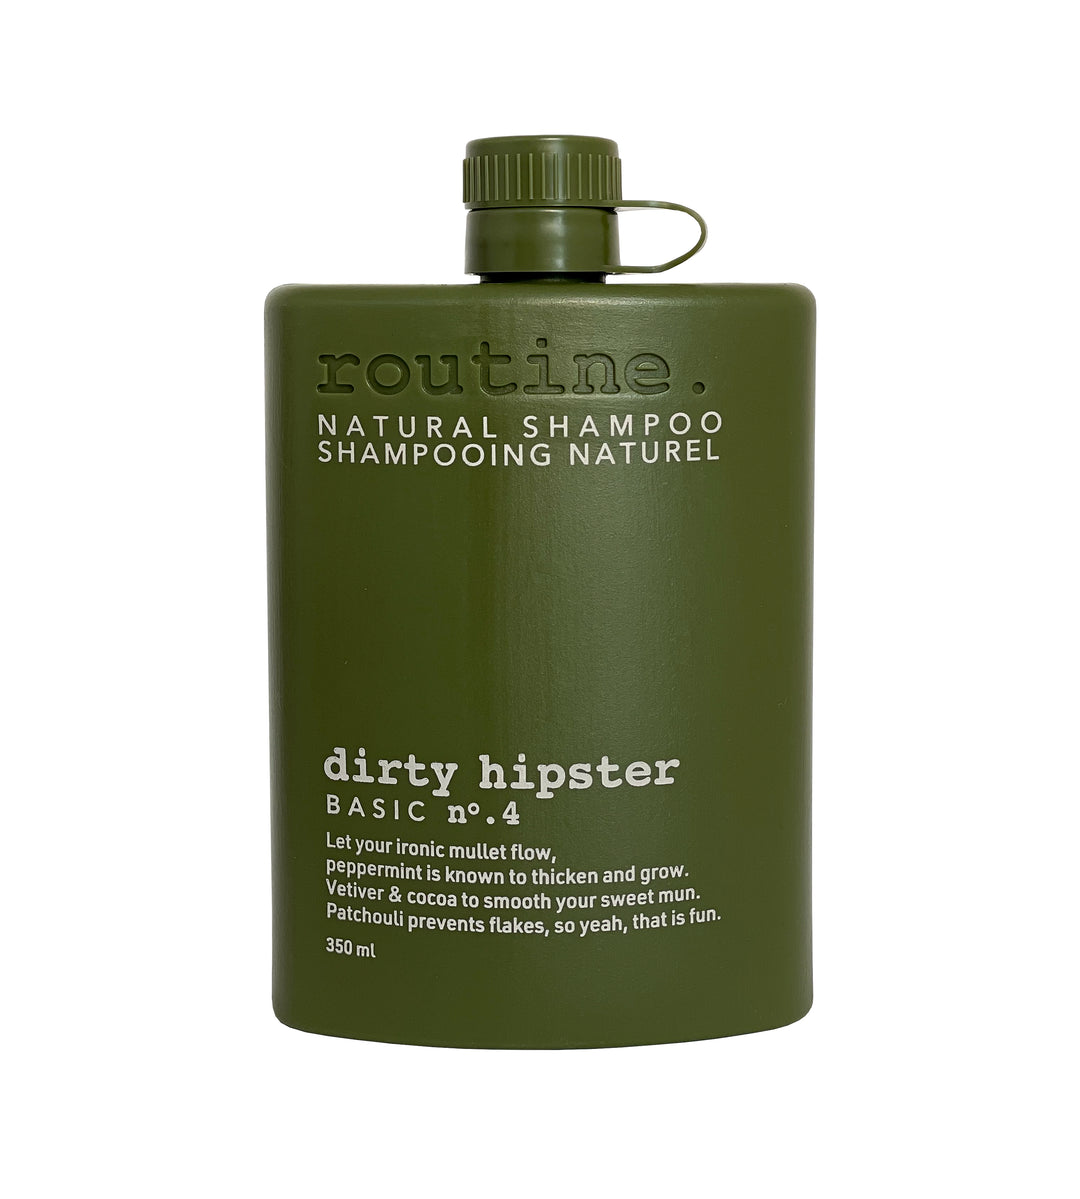 Routine Dirty Hipster Basic Shampoo 350ml